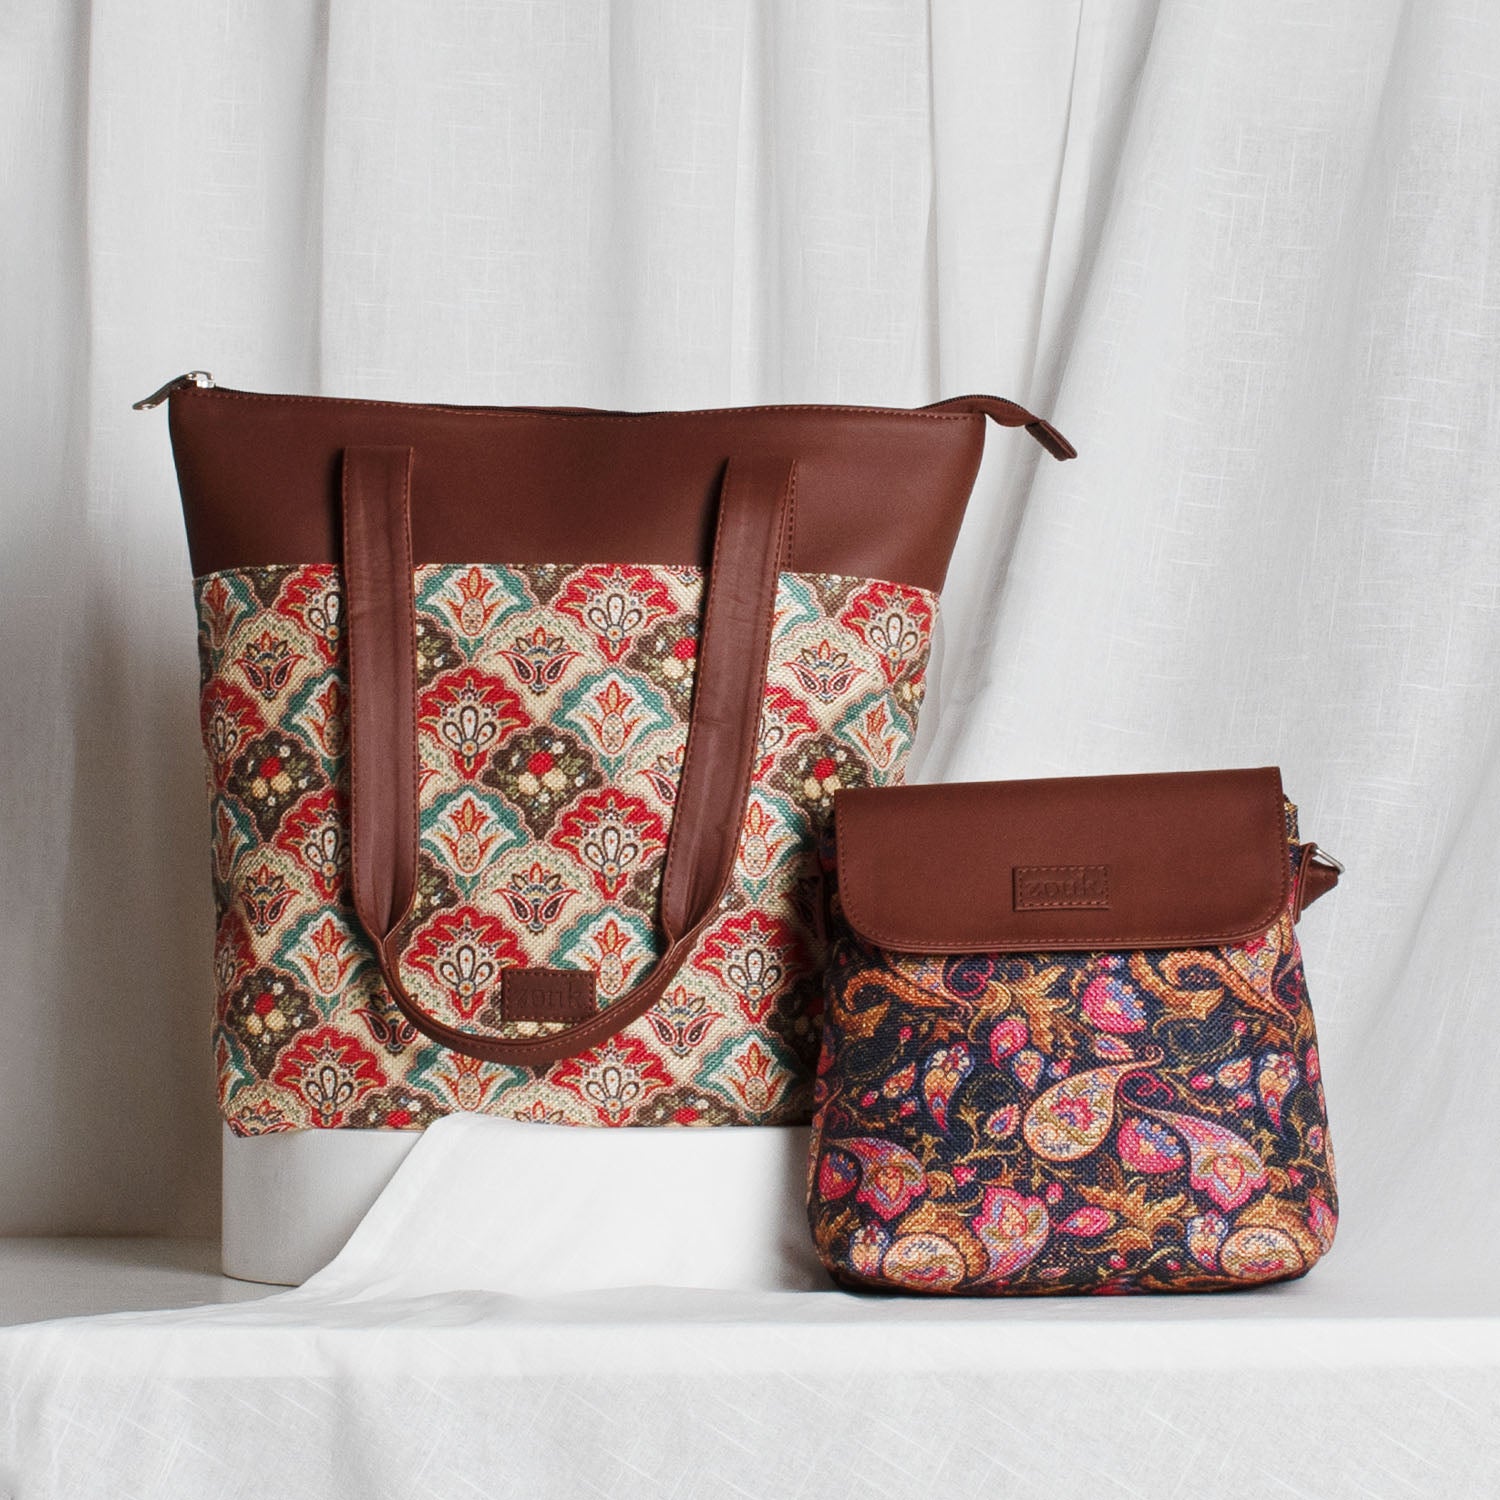 Mughal Art Multicolor & Paisley Print - Everyday Tote Bag & Flap Sling Bag Combo